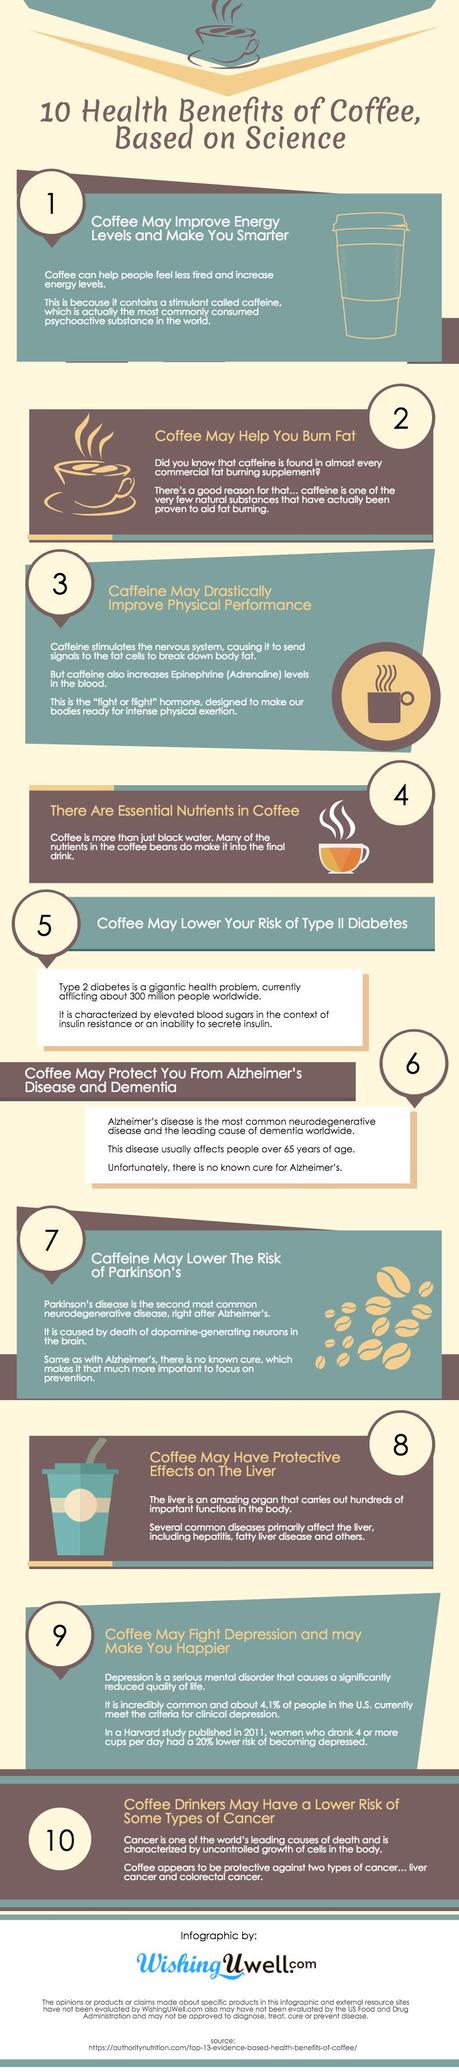 10 Health Benefits of Coffee